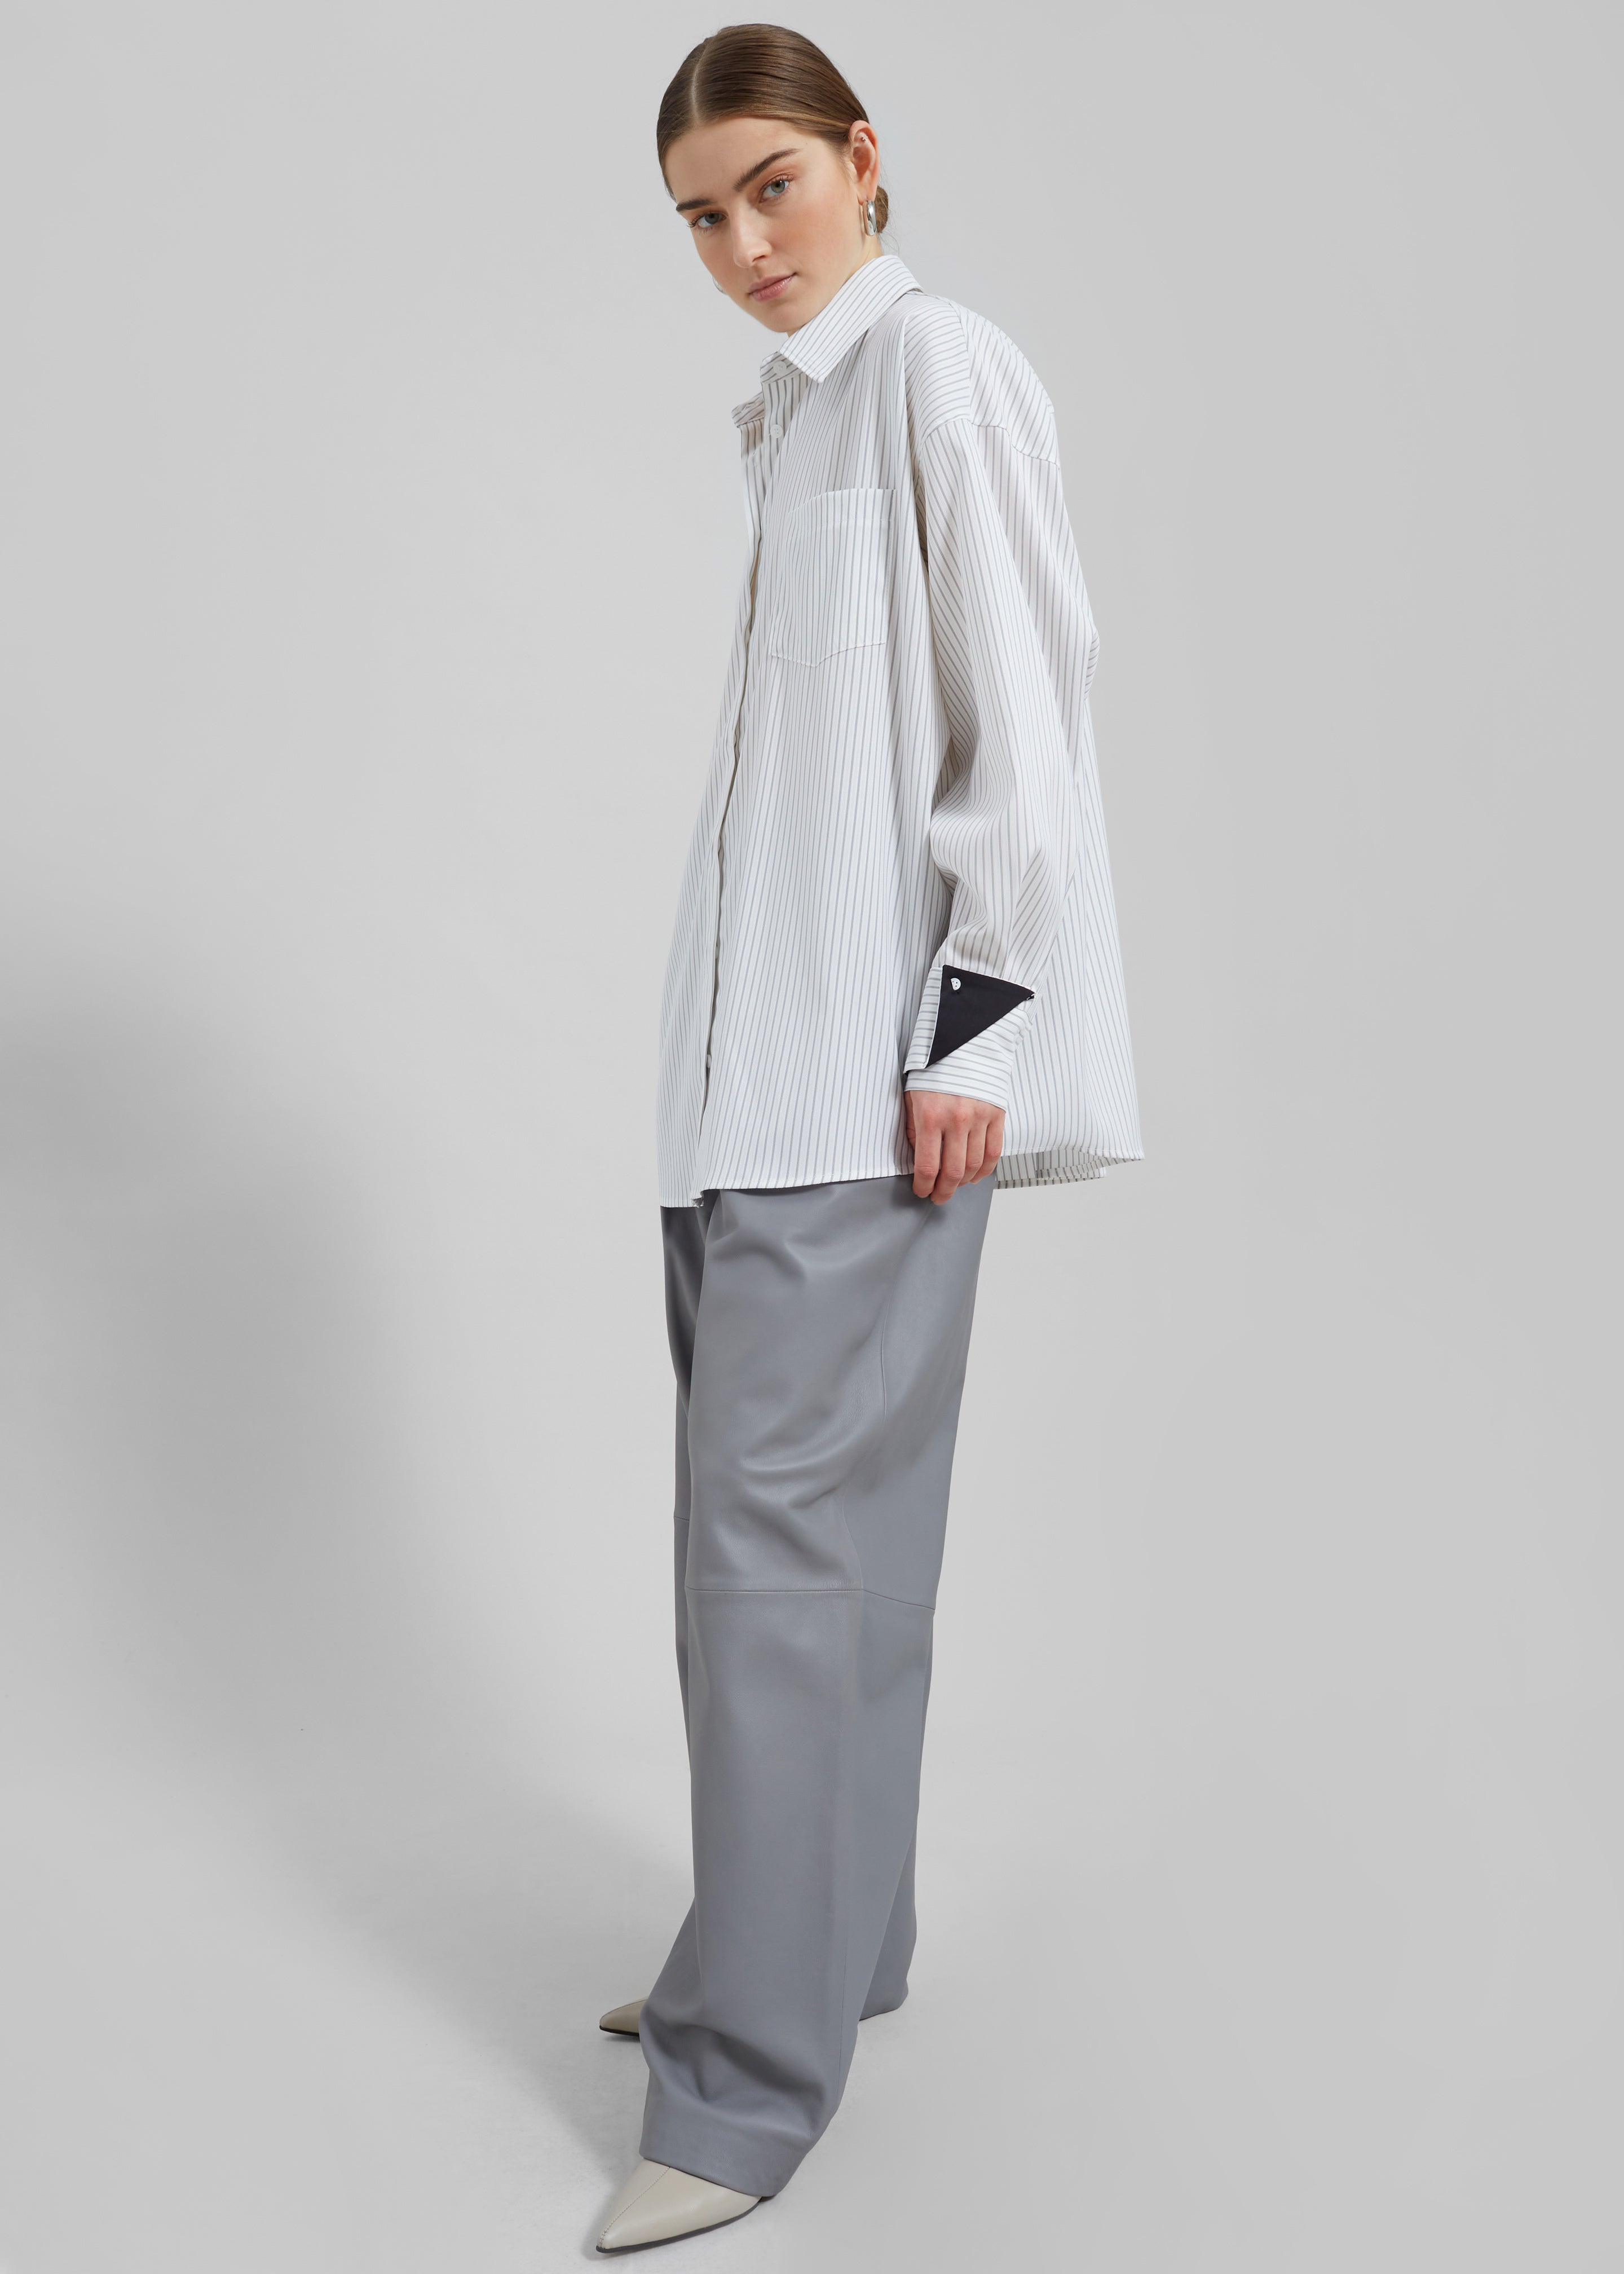 Leona Button Up Shirt - White/Grey Stripe - 5